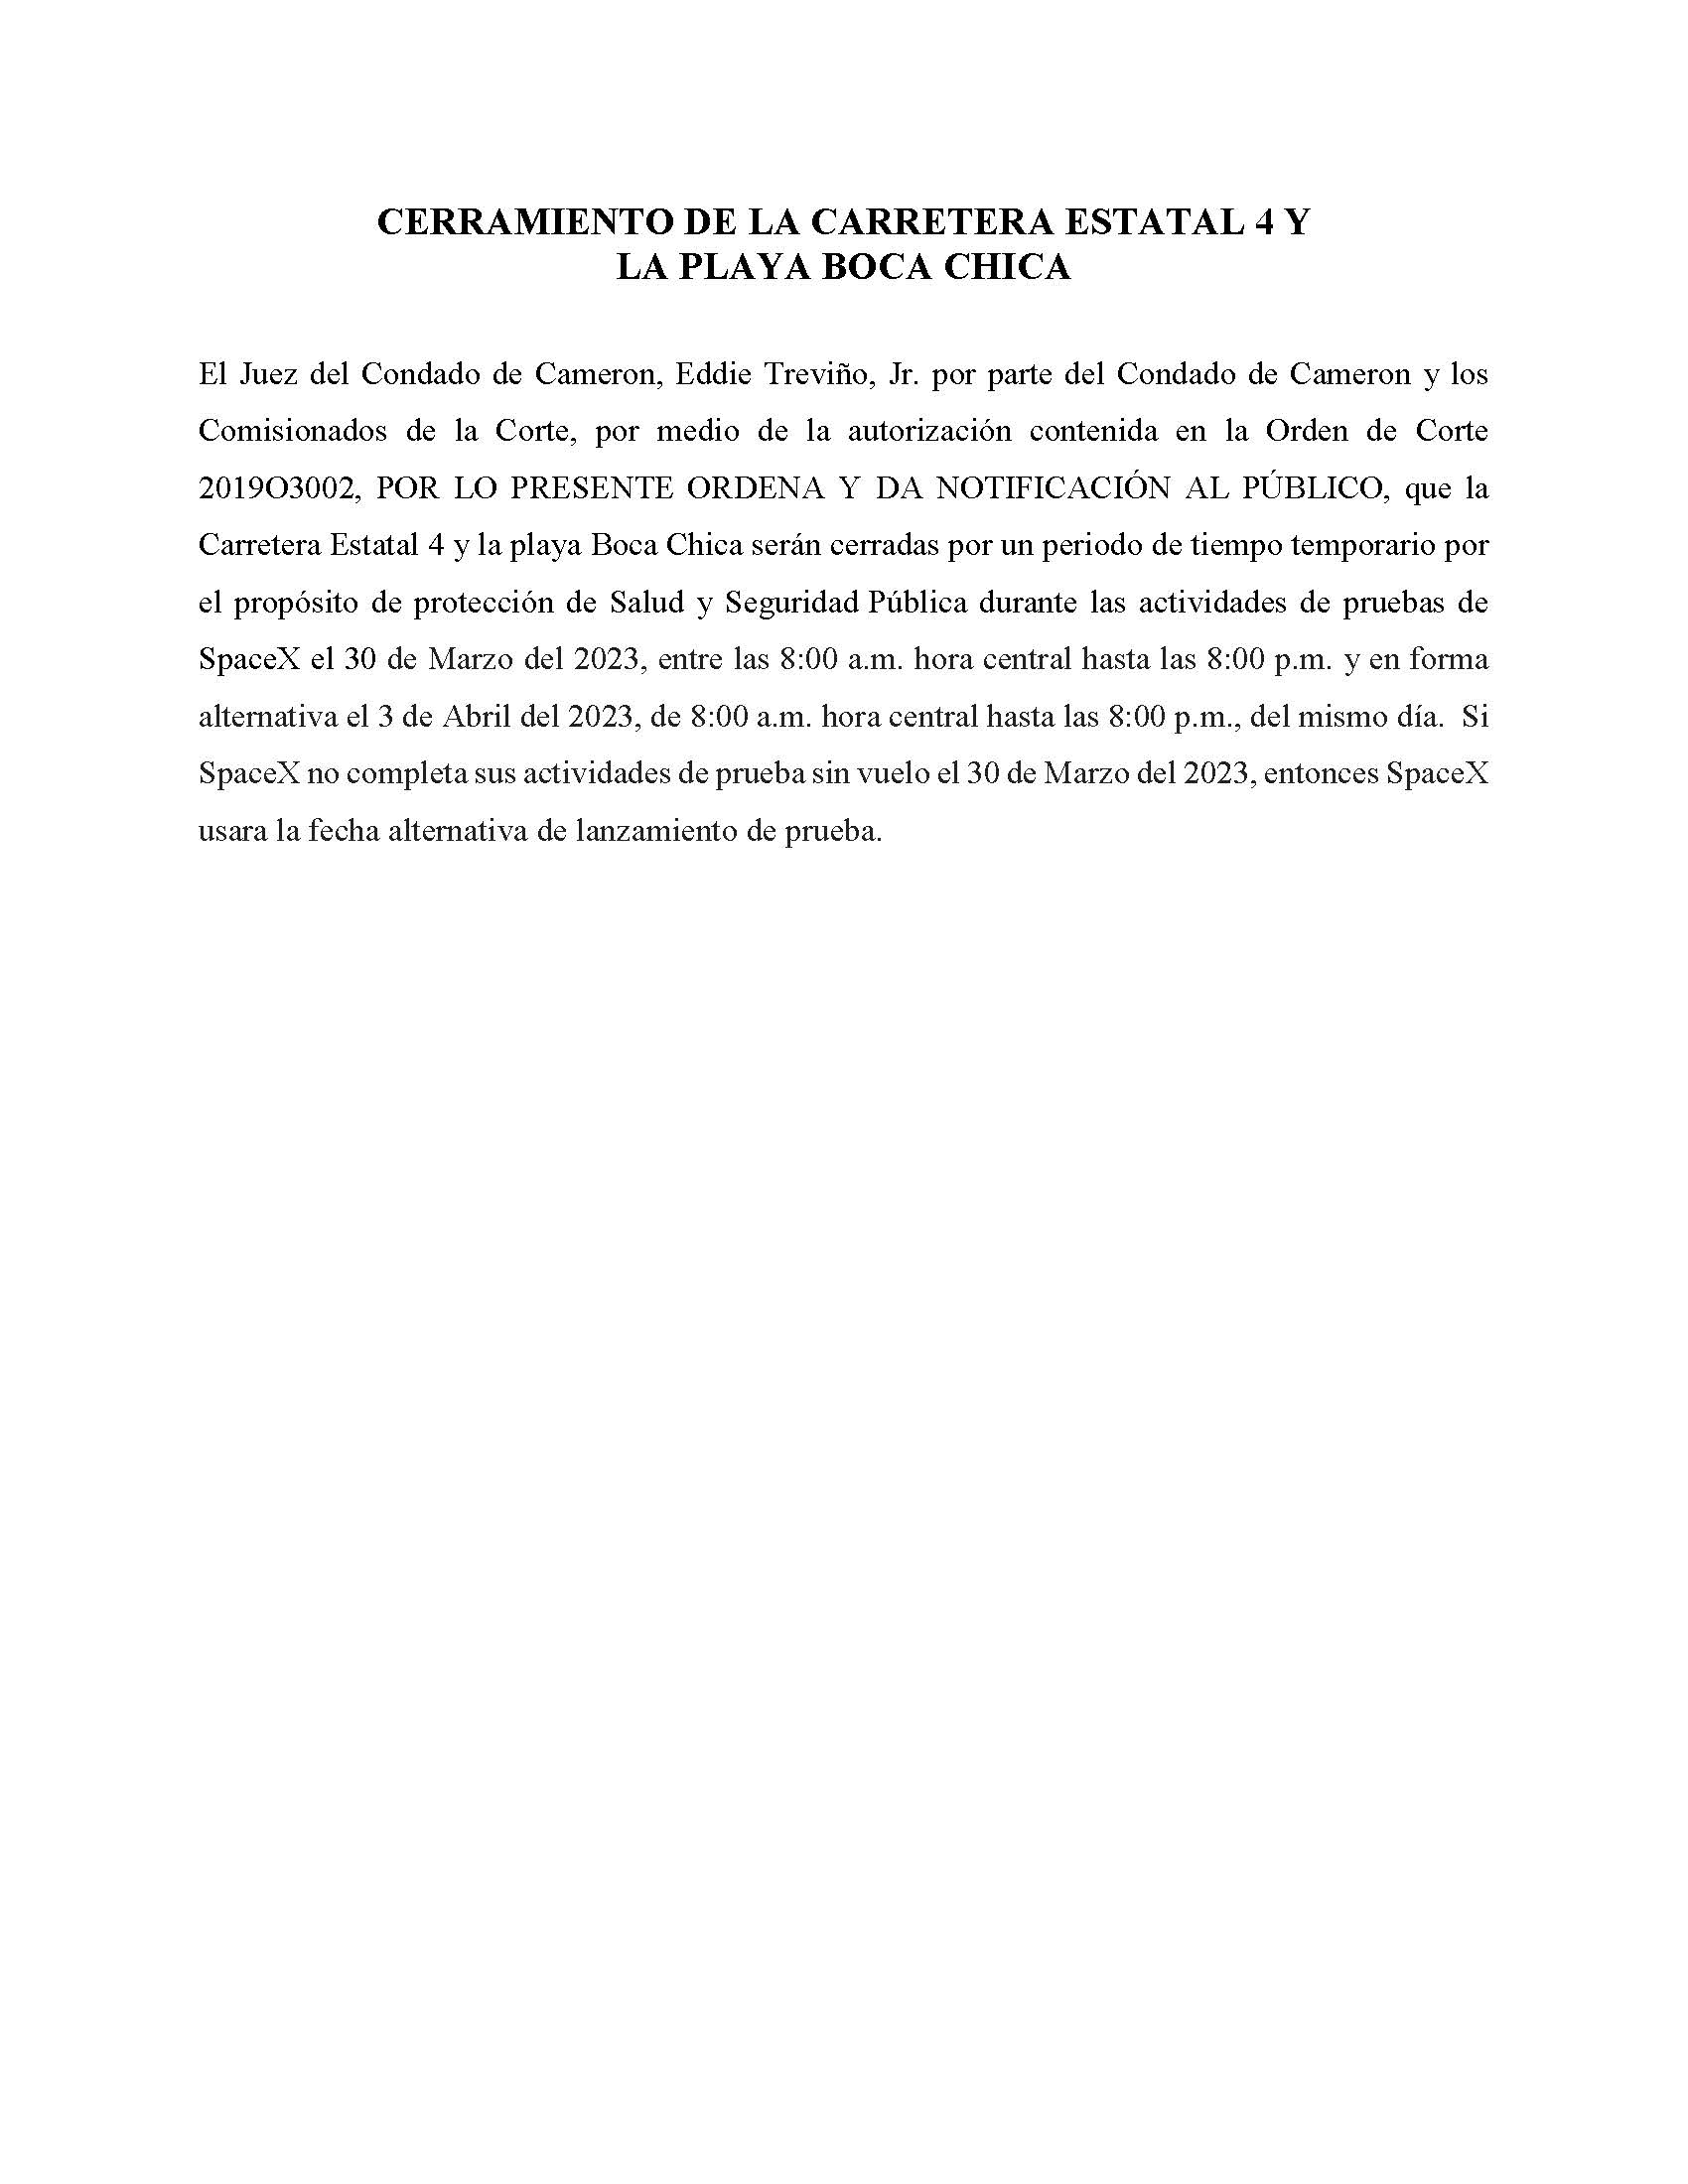 ORDER.CLOSURE OF HIGHWAY 4 Y LA PLAYA BOCA CHICA.SPANISH.03.30.23